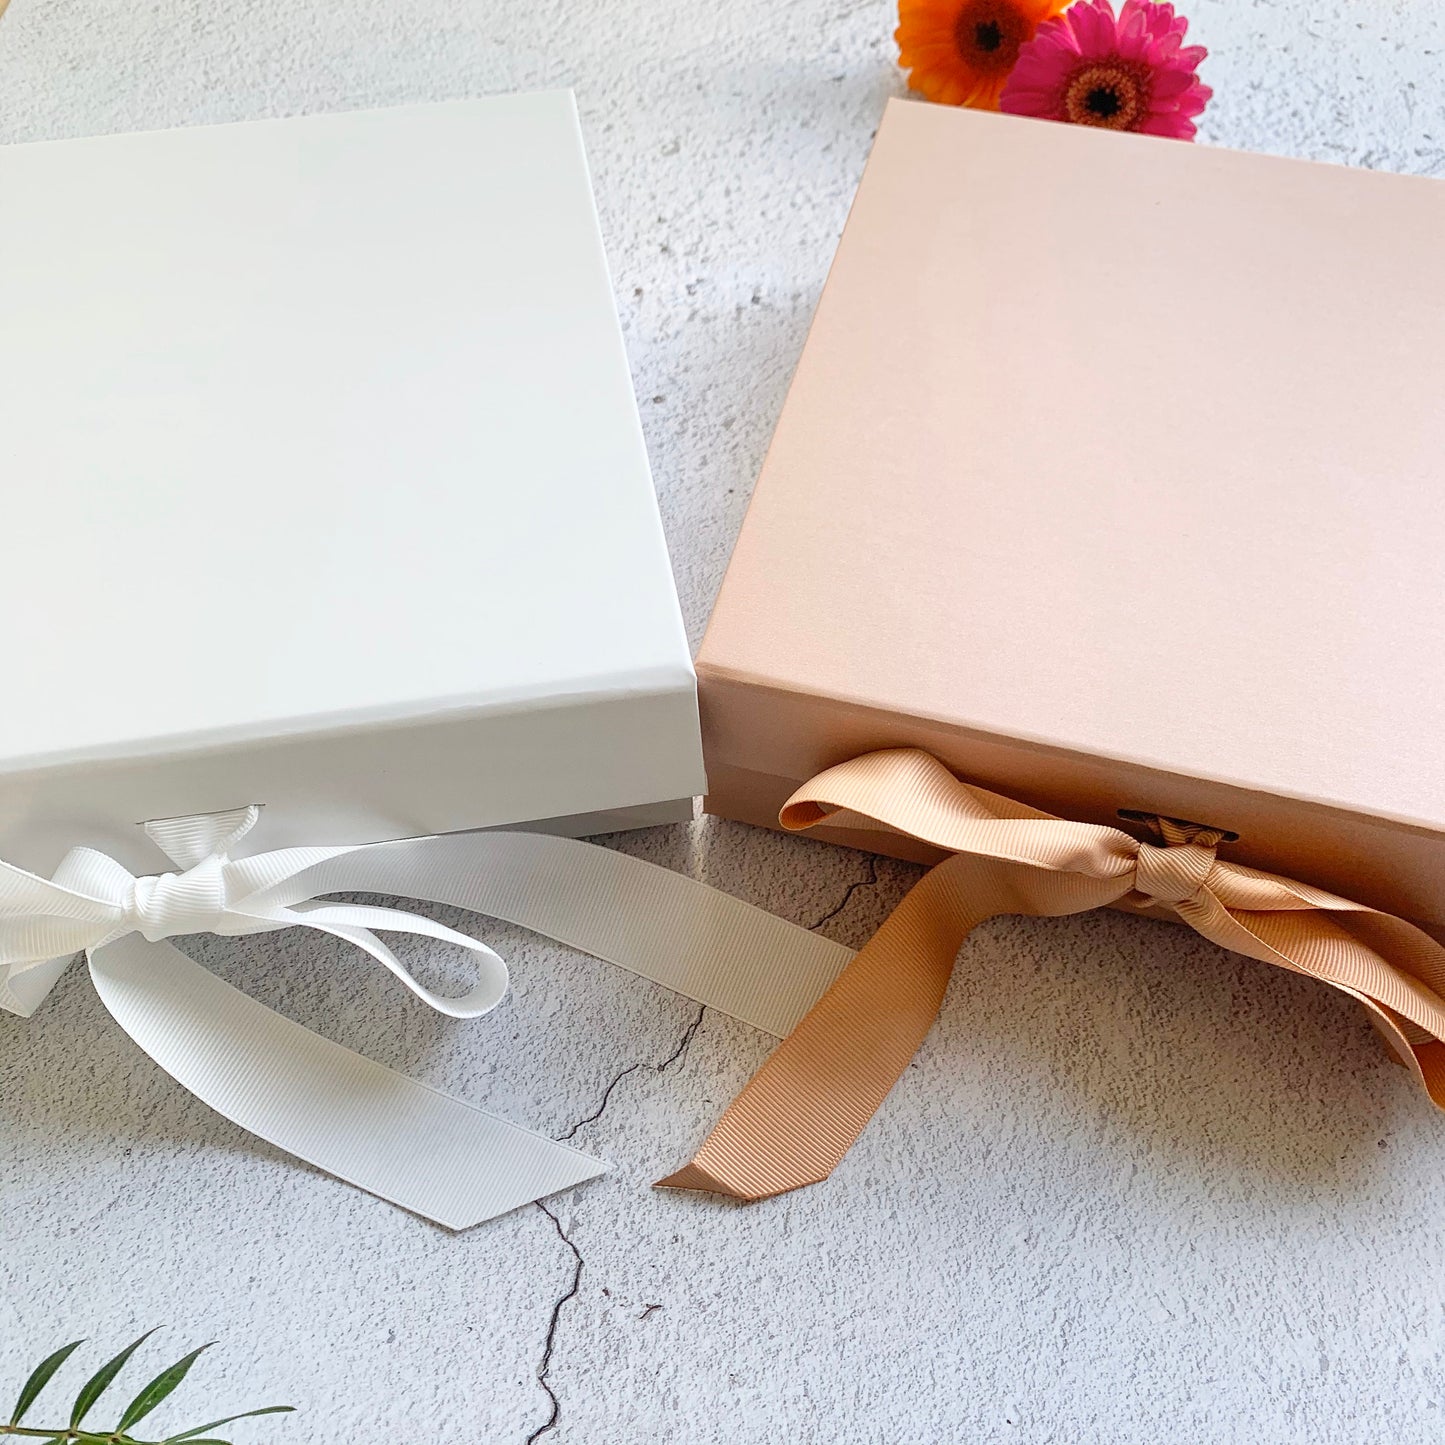 Bridesmaid proposal gift box, bridesmaid gift, maid of honour gift, personalised box, gift box, bridal party gift, gift for bride